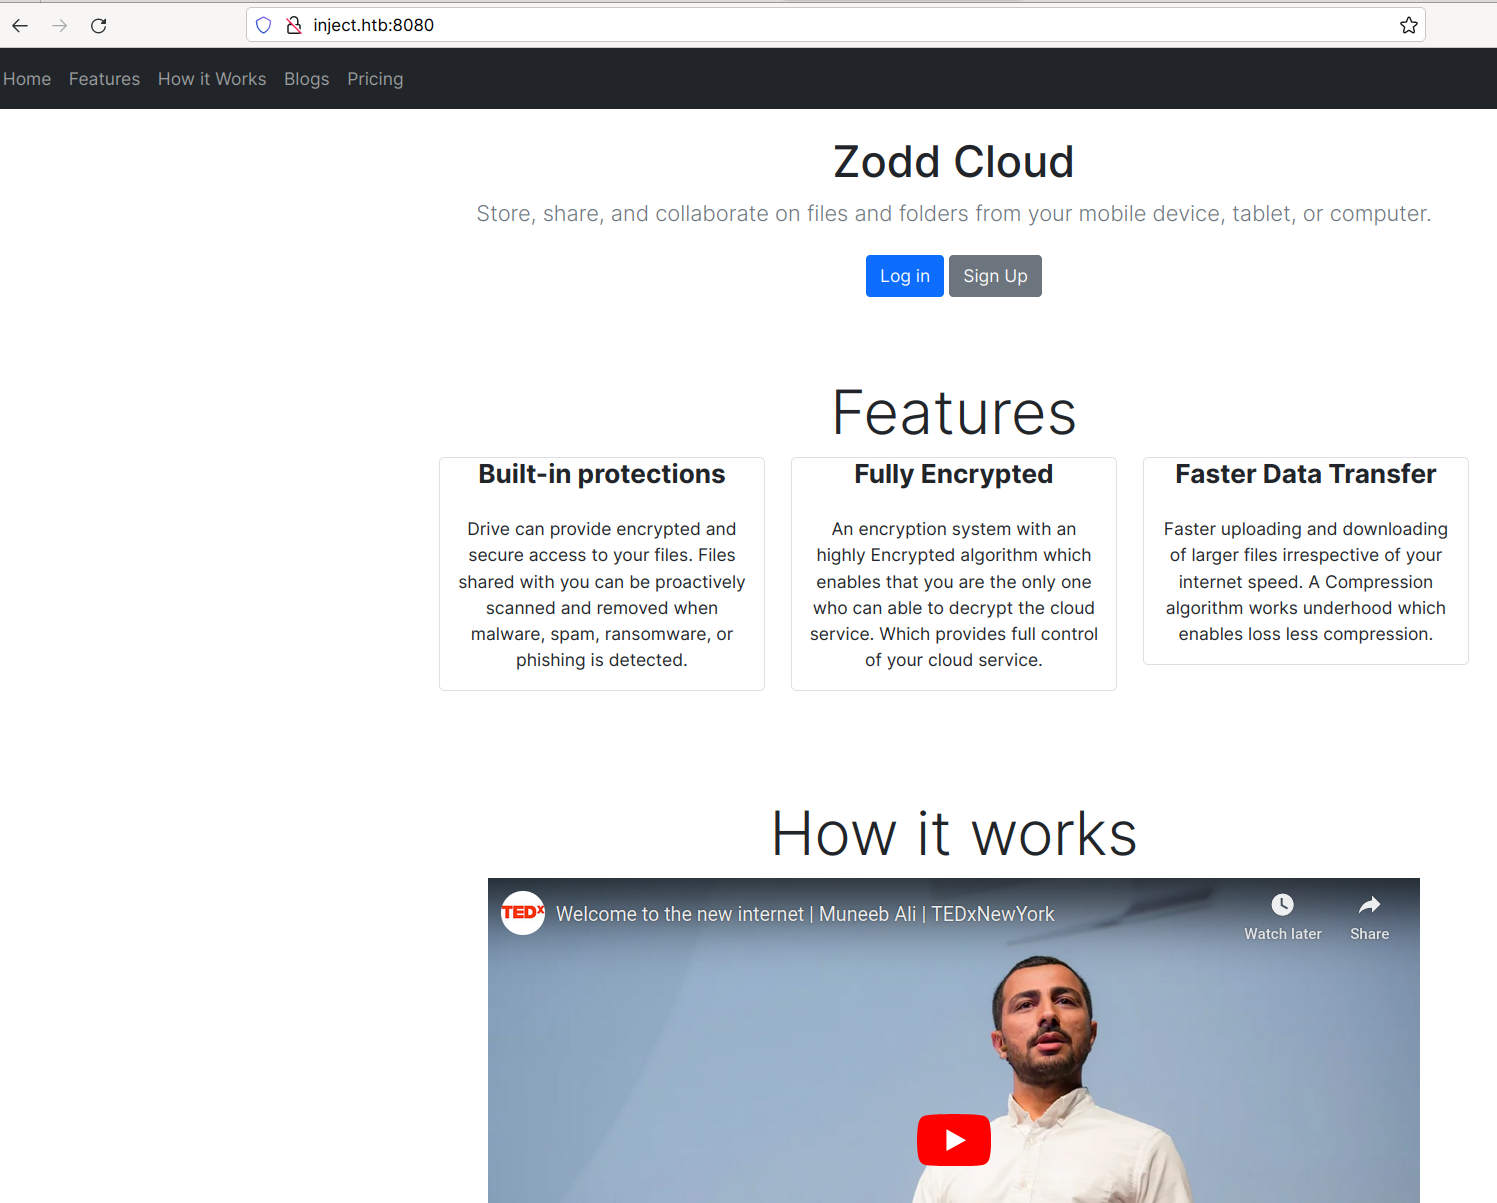 Zodd cloud page